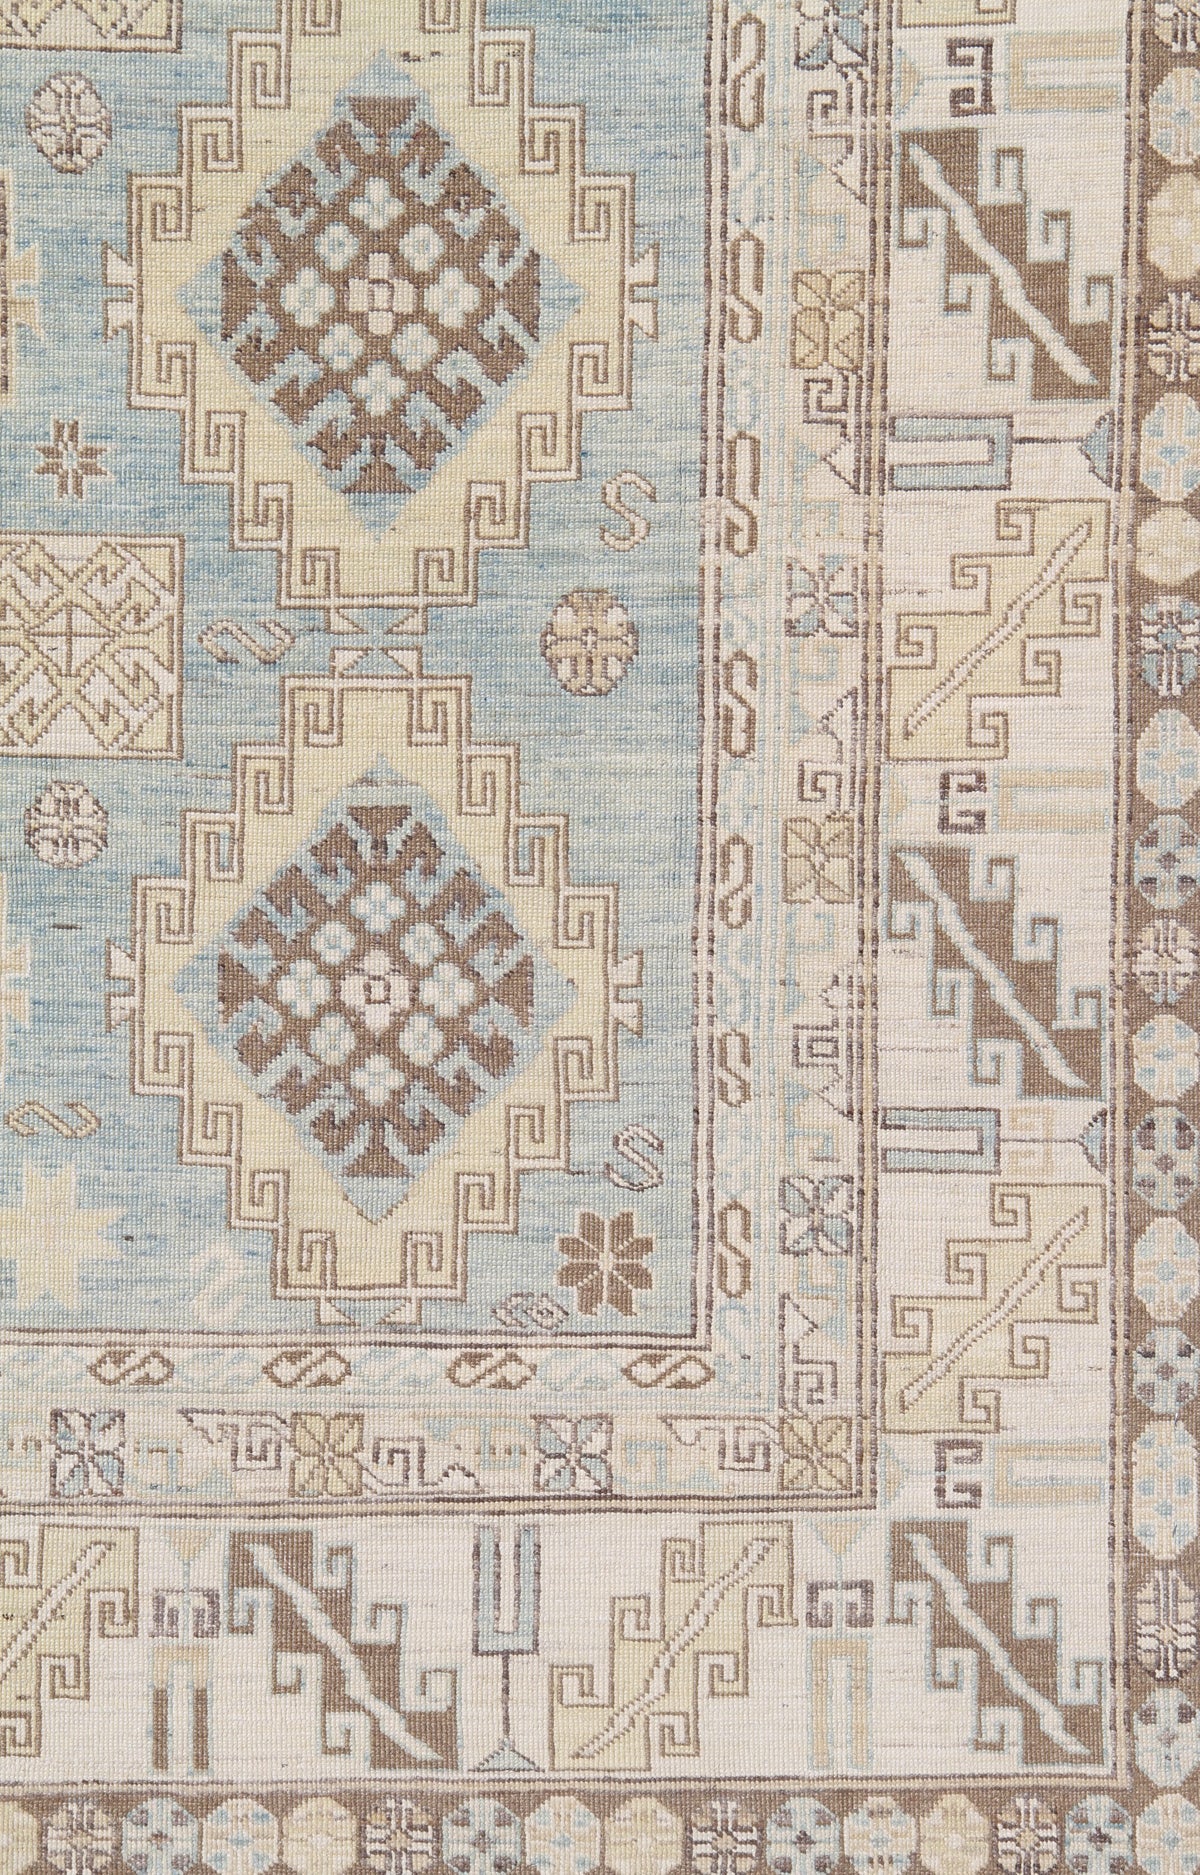 10'x8' Ariana Traditional Soft Pastel Geometric Hazara Rug